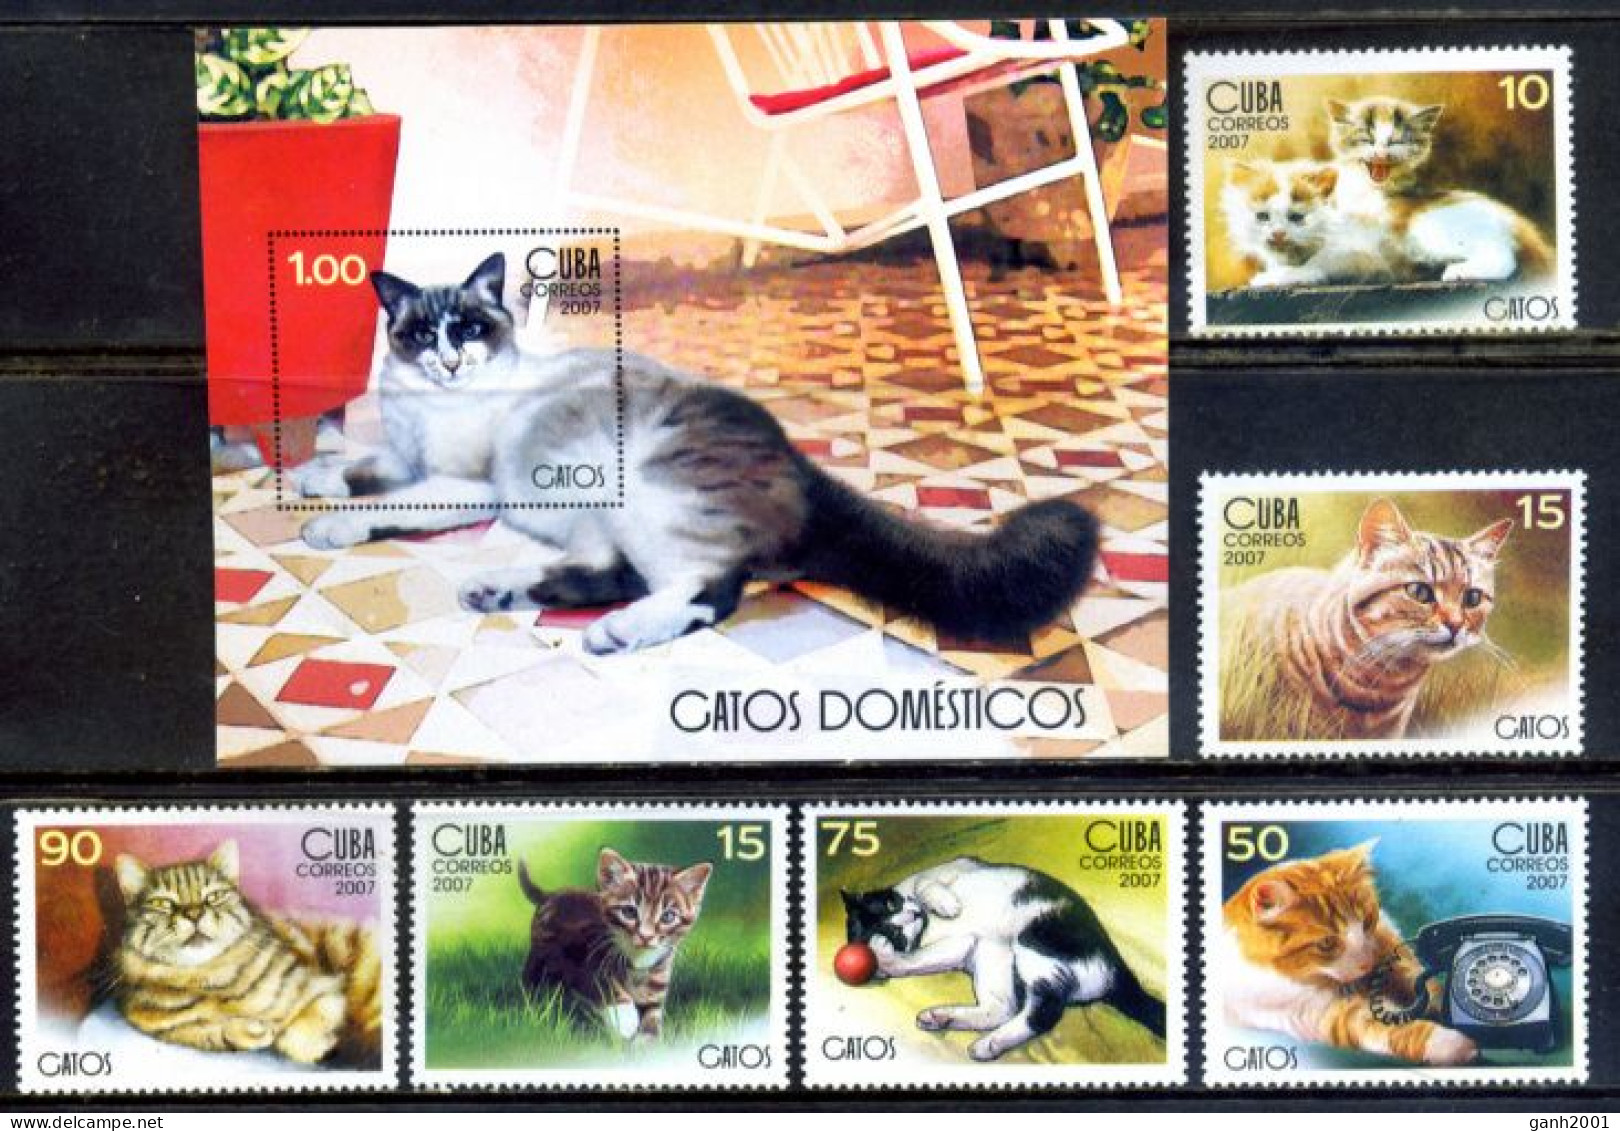 Cuba 2007 / Cats MNH Gatos Katzen Chats / Cu6001 29-21 - Gatos Domésticos